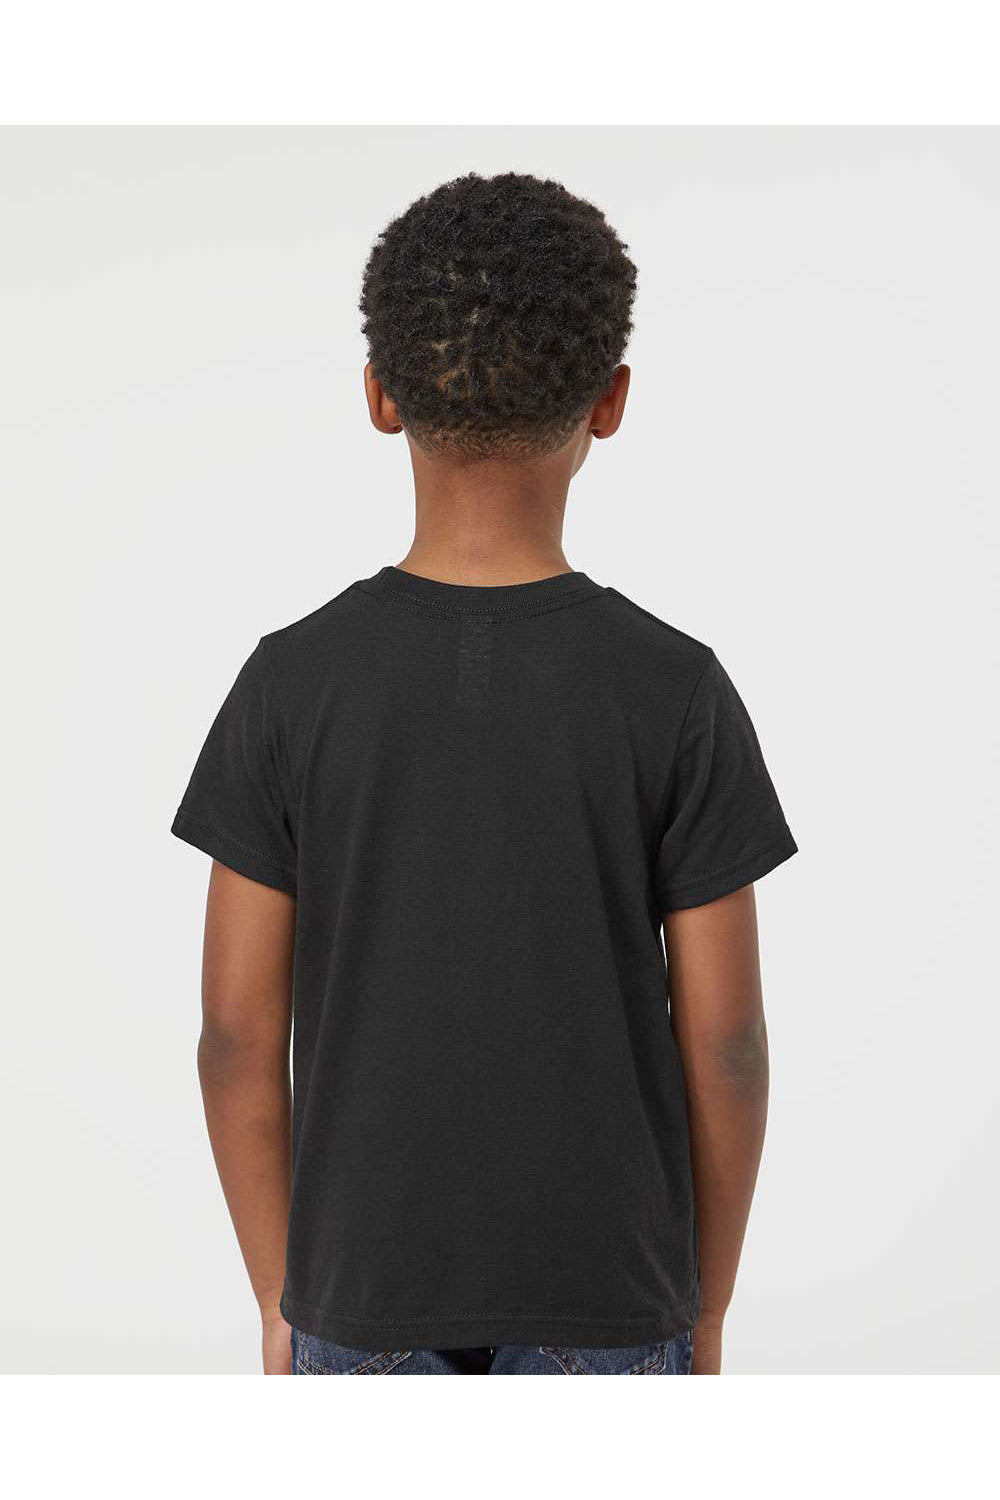 Tultex 265 Youth Poly-Rich Short Sleeve Crewneck T-Shirt Black Model Back